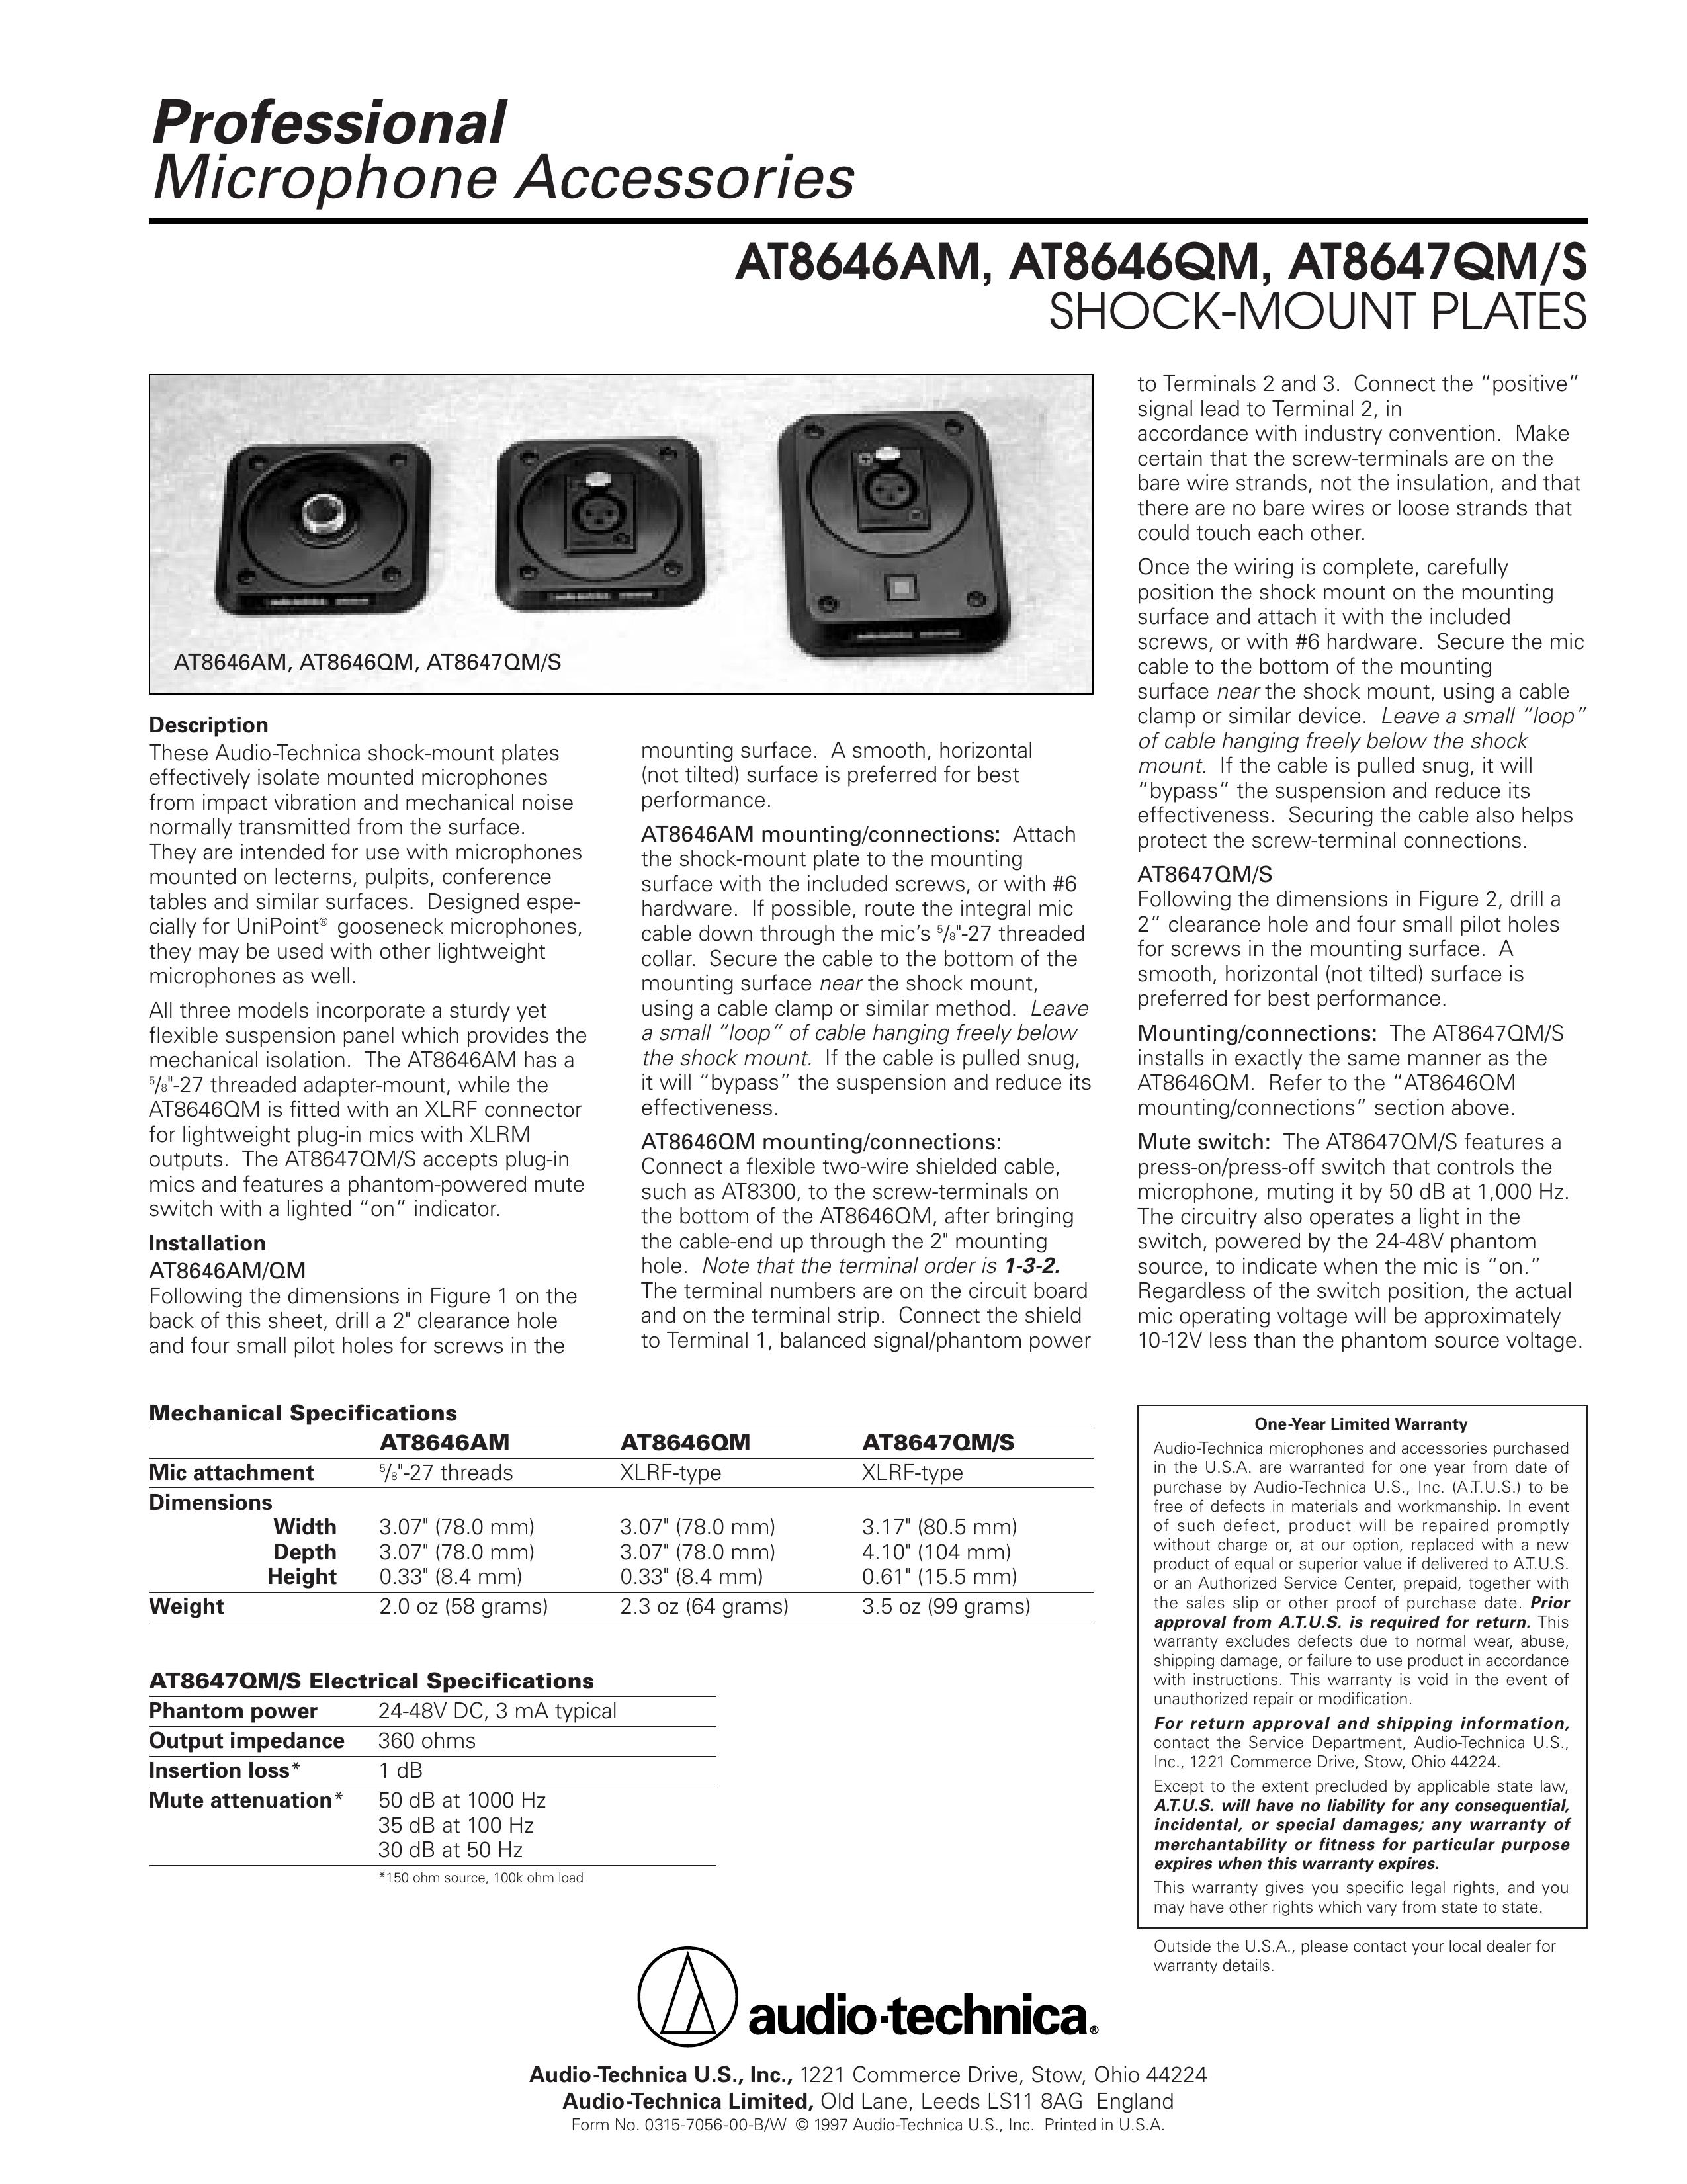 Audio-Technica AT8646QM Microphone User Manual